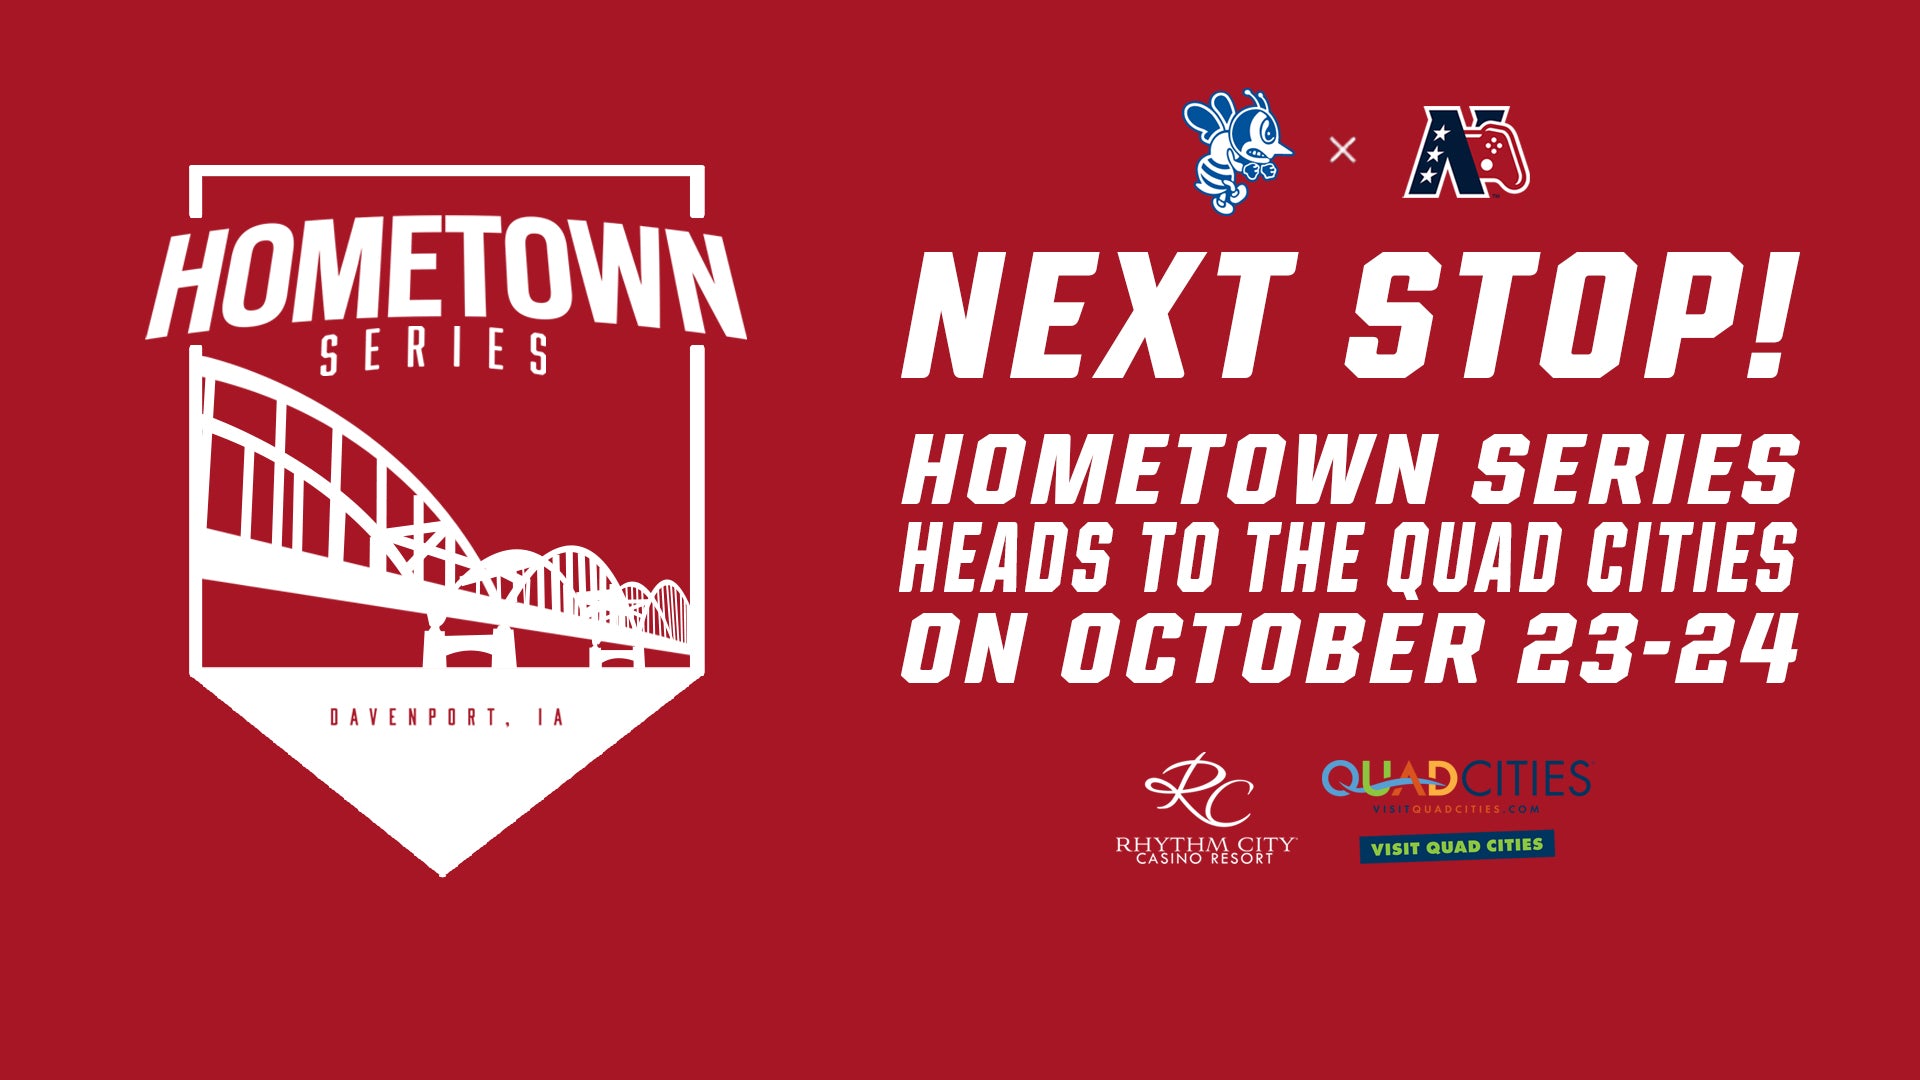 NECC Hometown Series Scholastic LAN Event Coming to Quad Cities in October